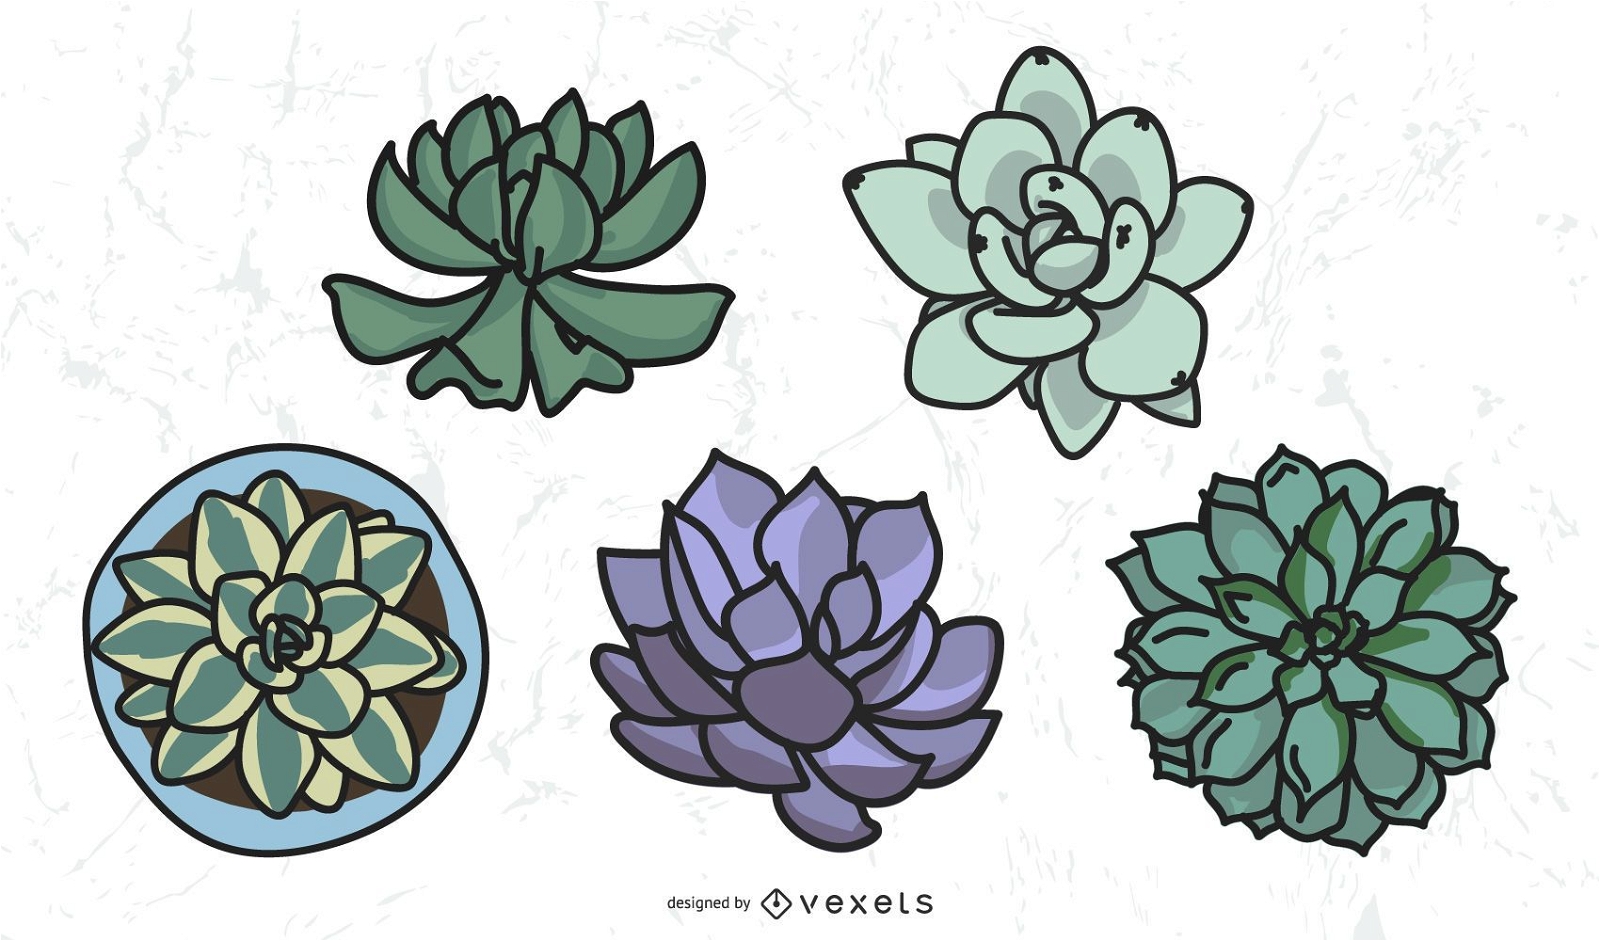 Colored cacti set